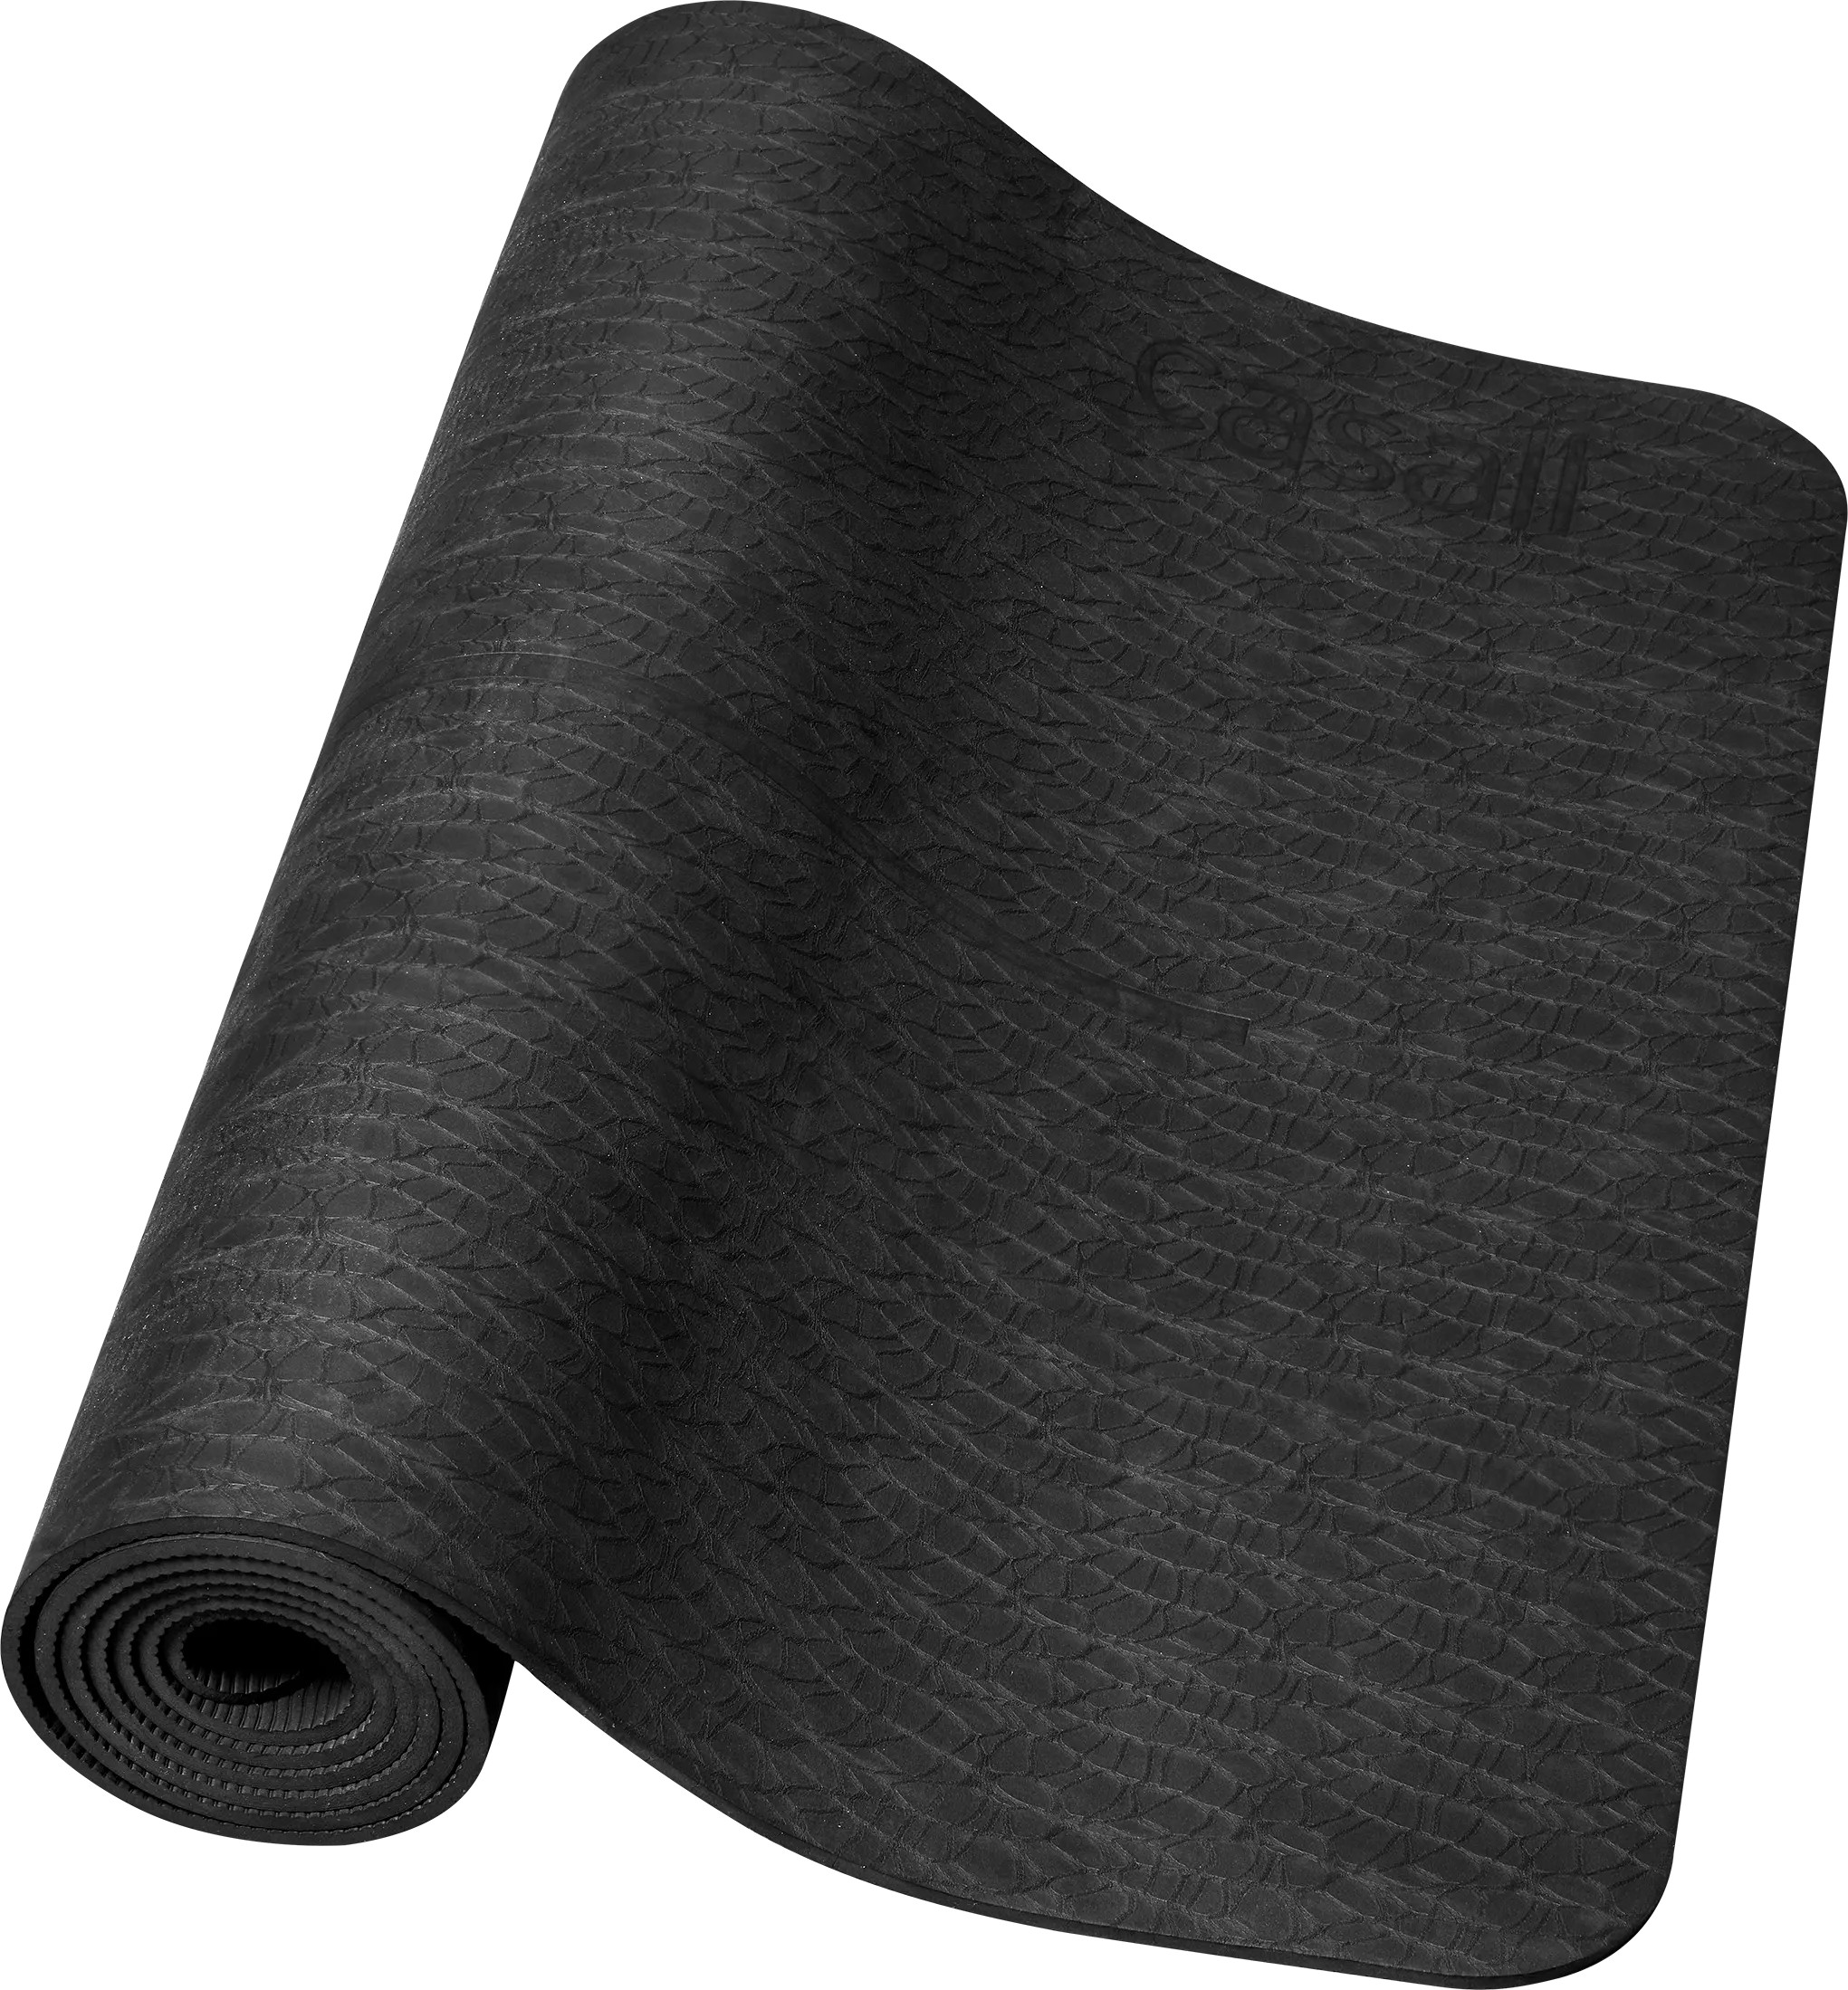 Exercise Mat Cushion 5mm PVC Free Black, Buy Exercise Mat Cushion 5mm PVC  Free Black here